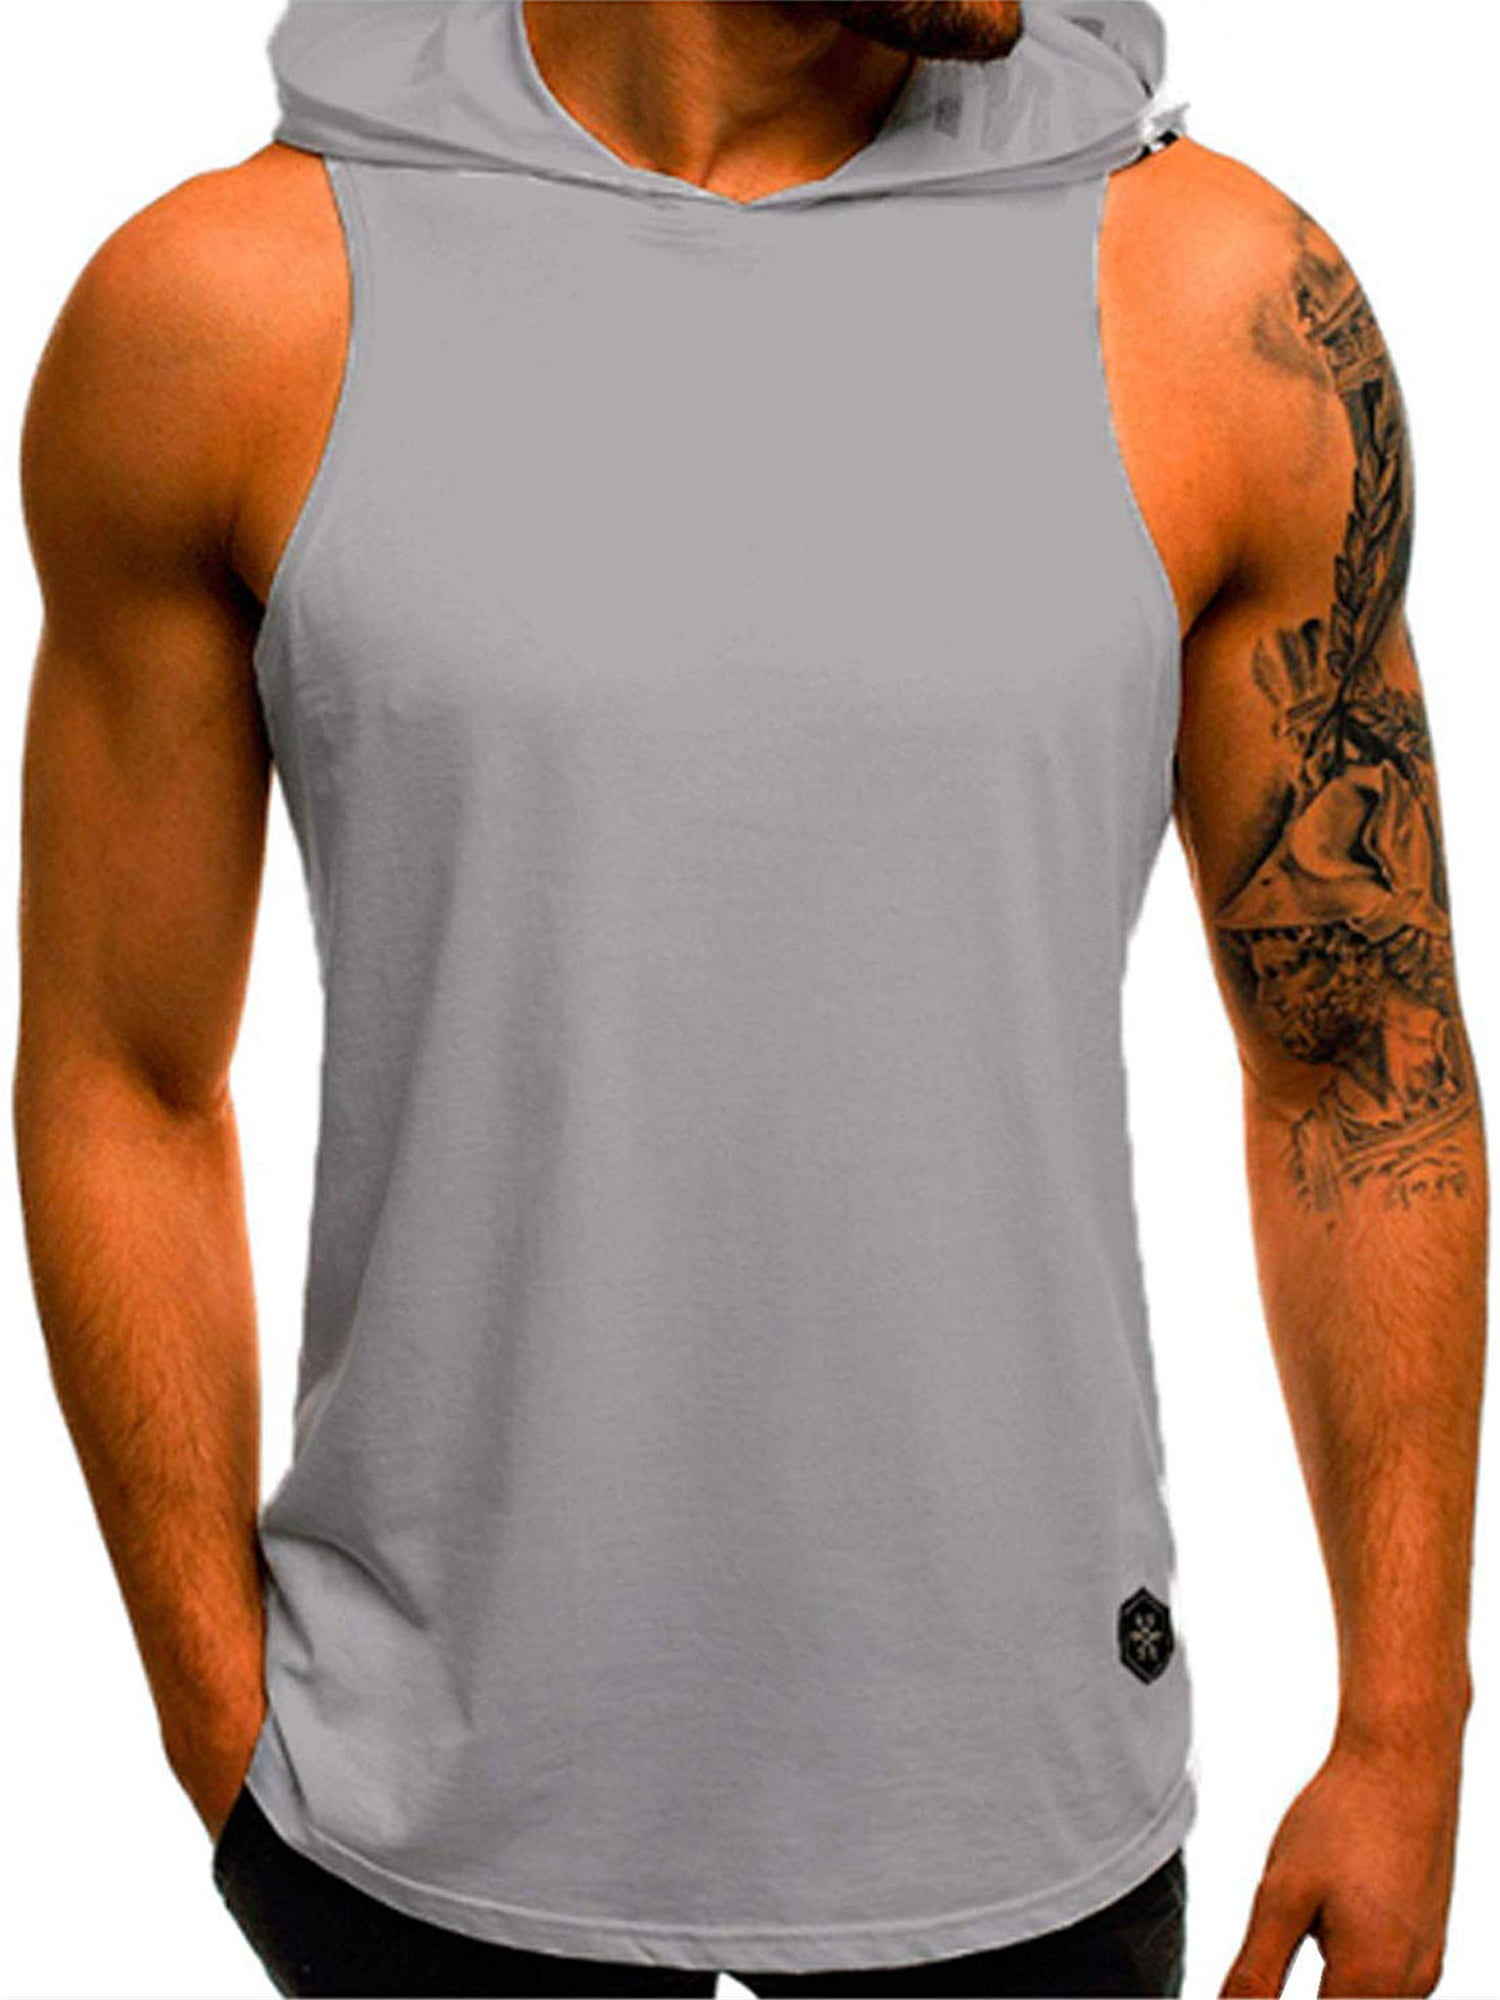 DIOMOR Mens Casual Baggy Soft Tank Tops Fashion Words Print Comfy Sleevelss Sleep Pajamas Gym Workout Cami Sweat Shirts 